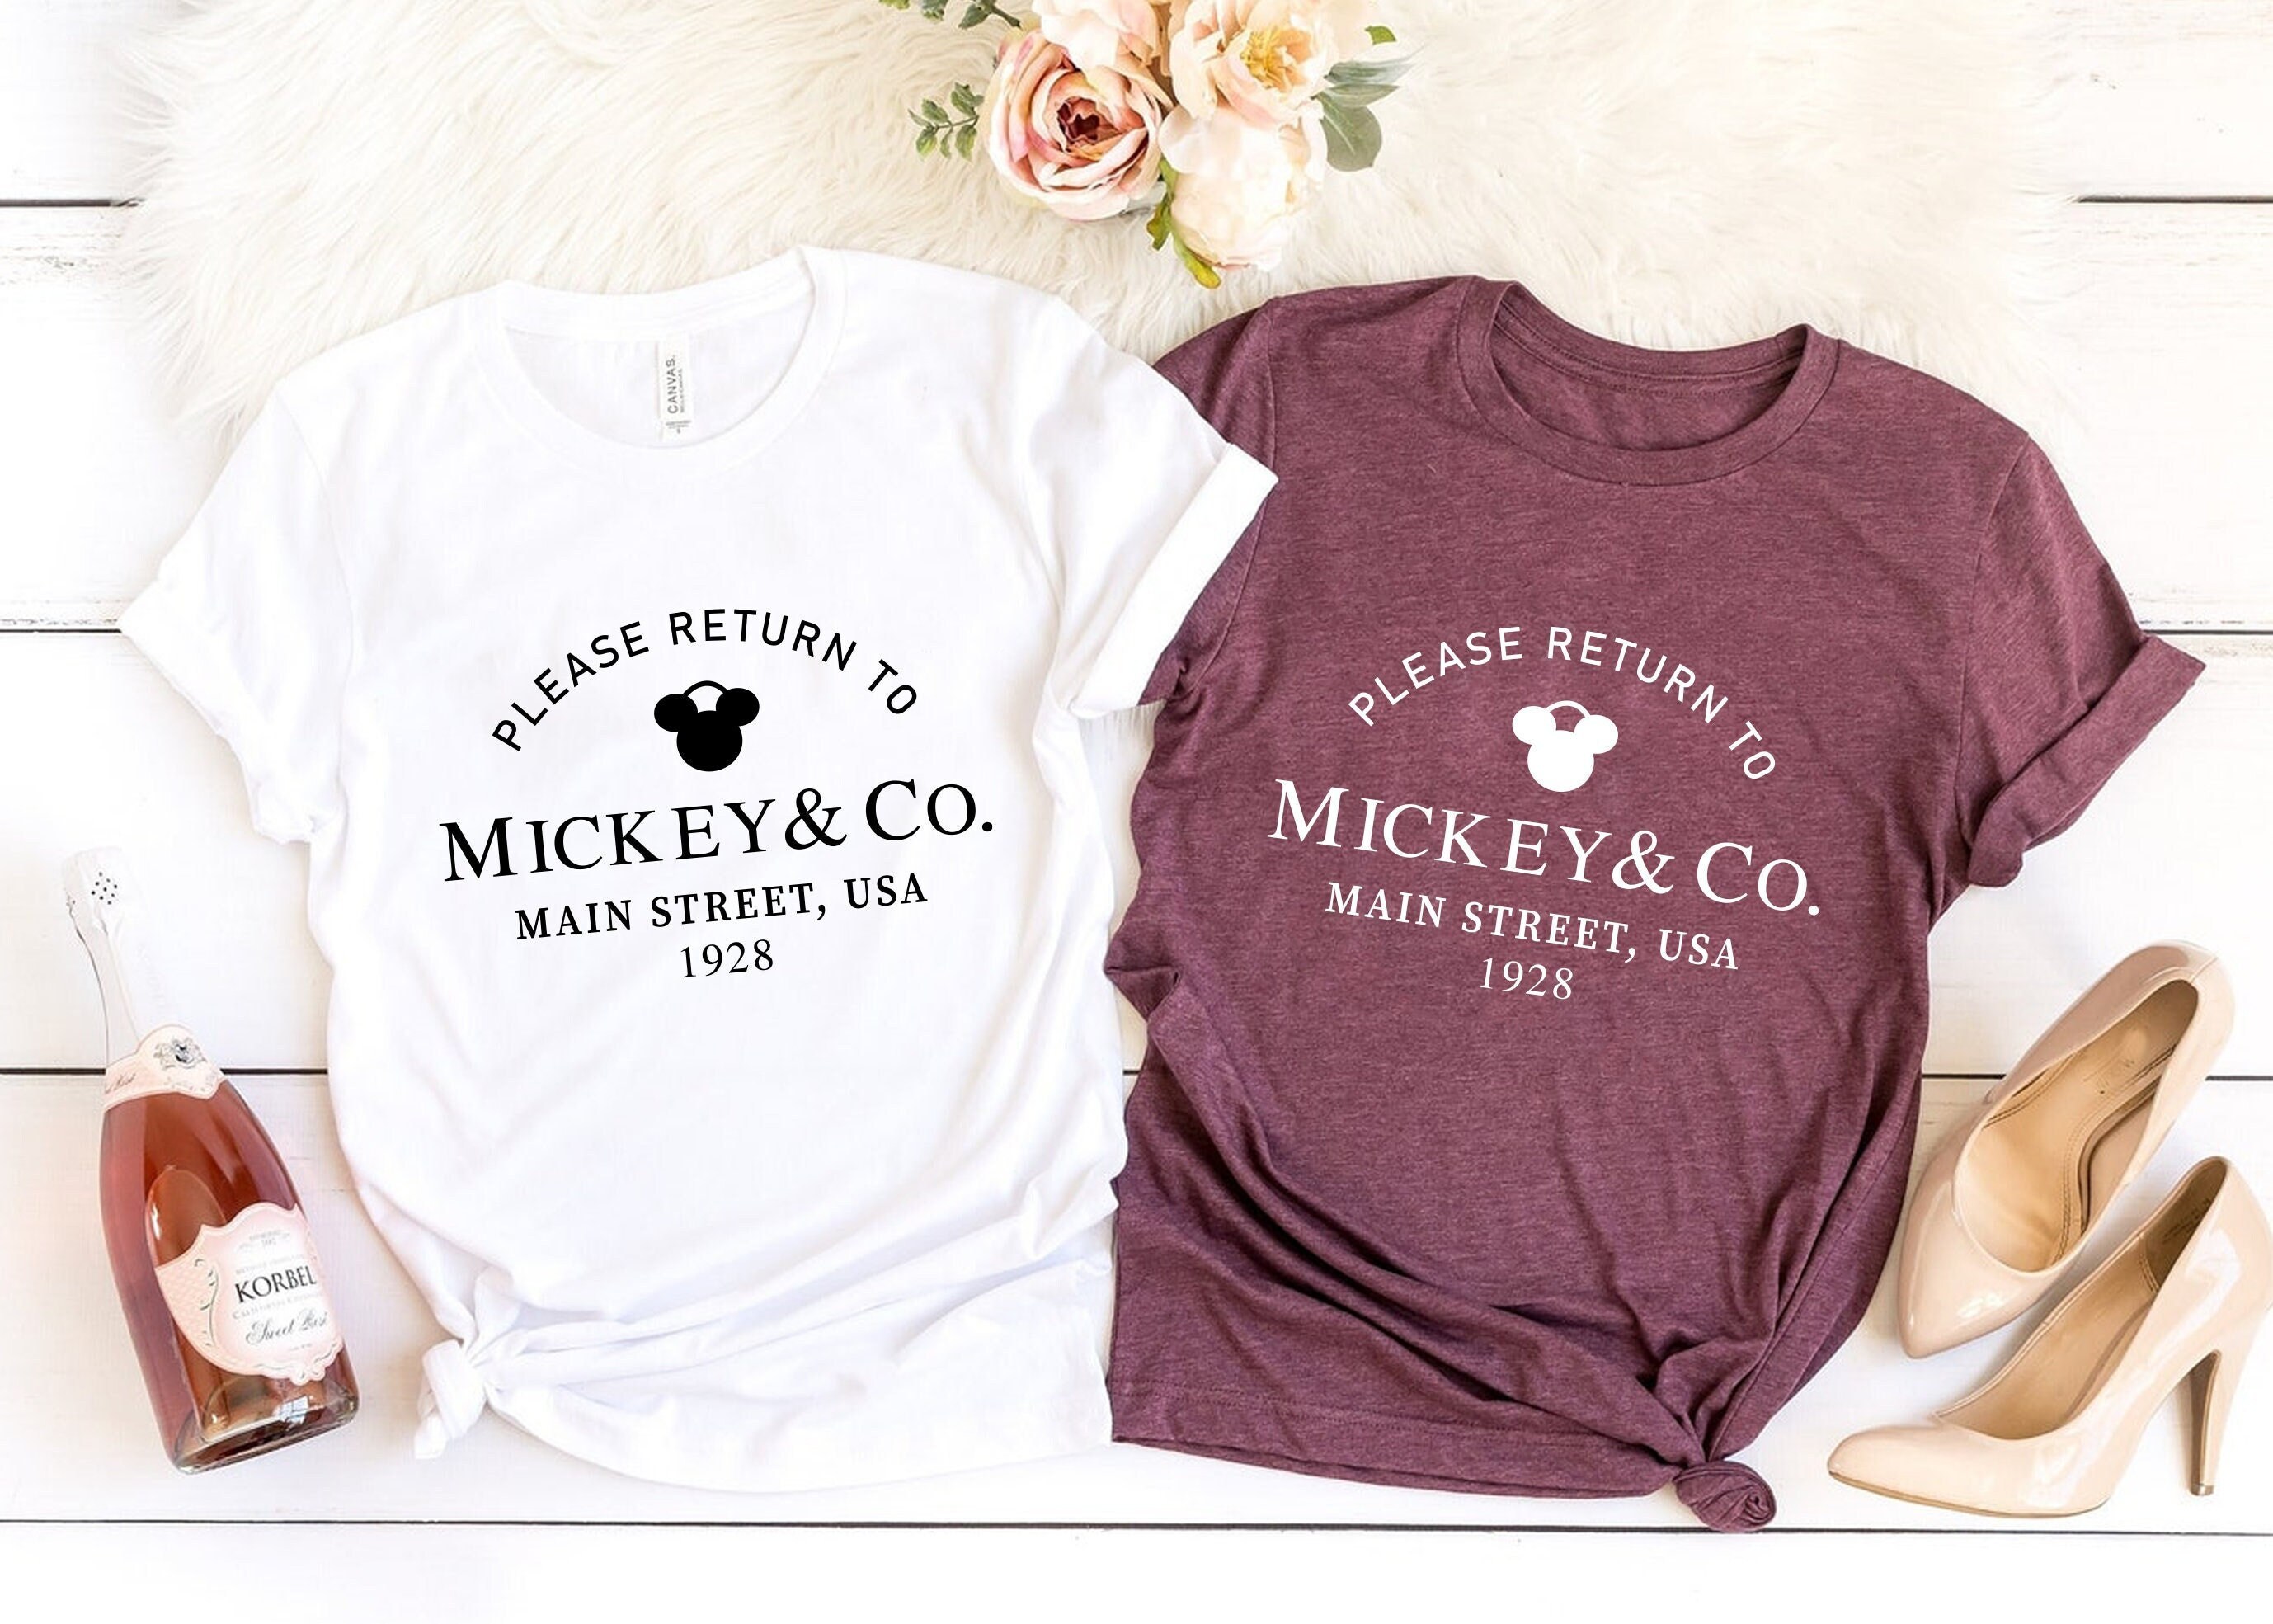 Discover Return to Mickey & Co Shirt, Mickey and Co., Main Street USA, Disney Trip Shirt